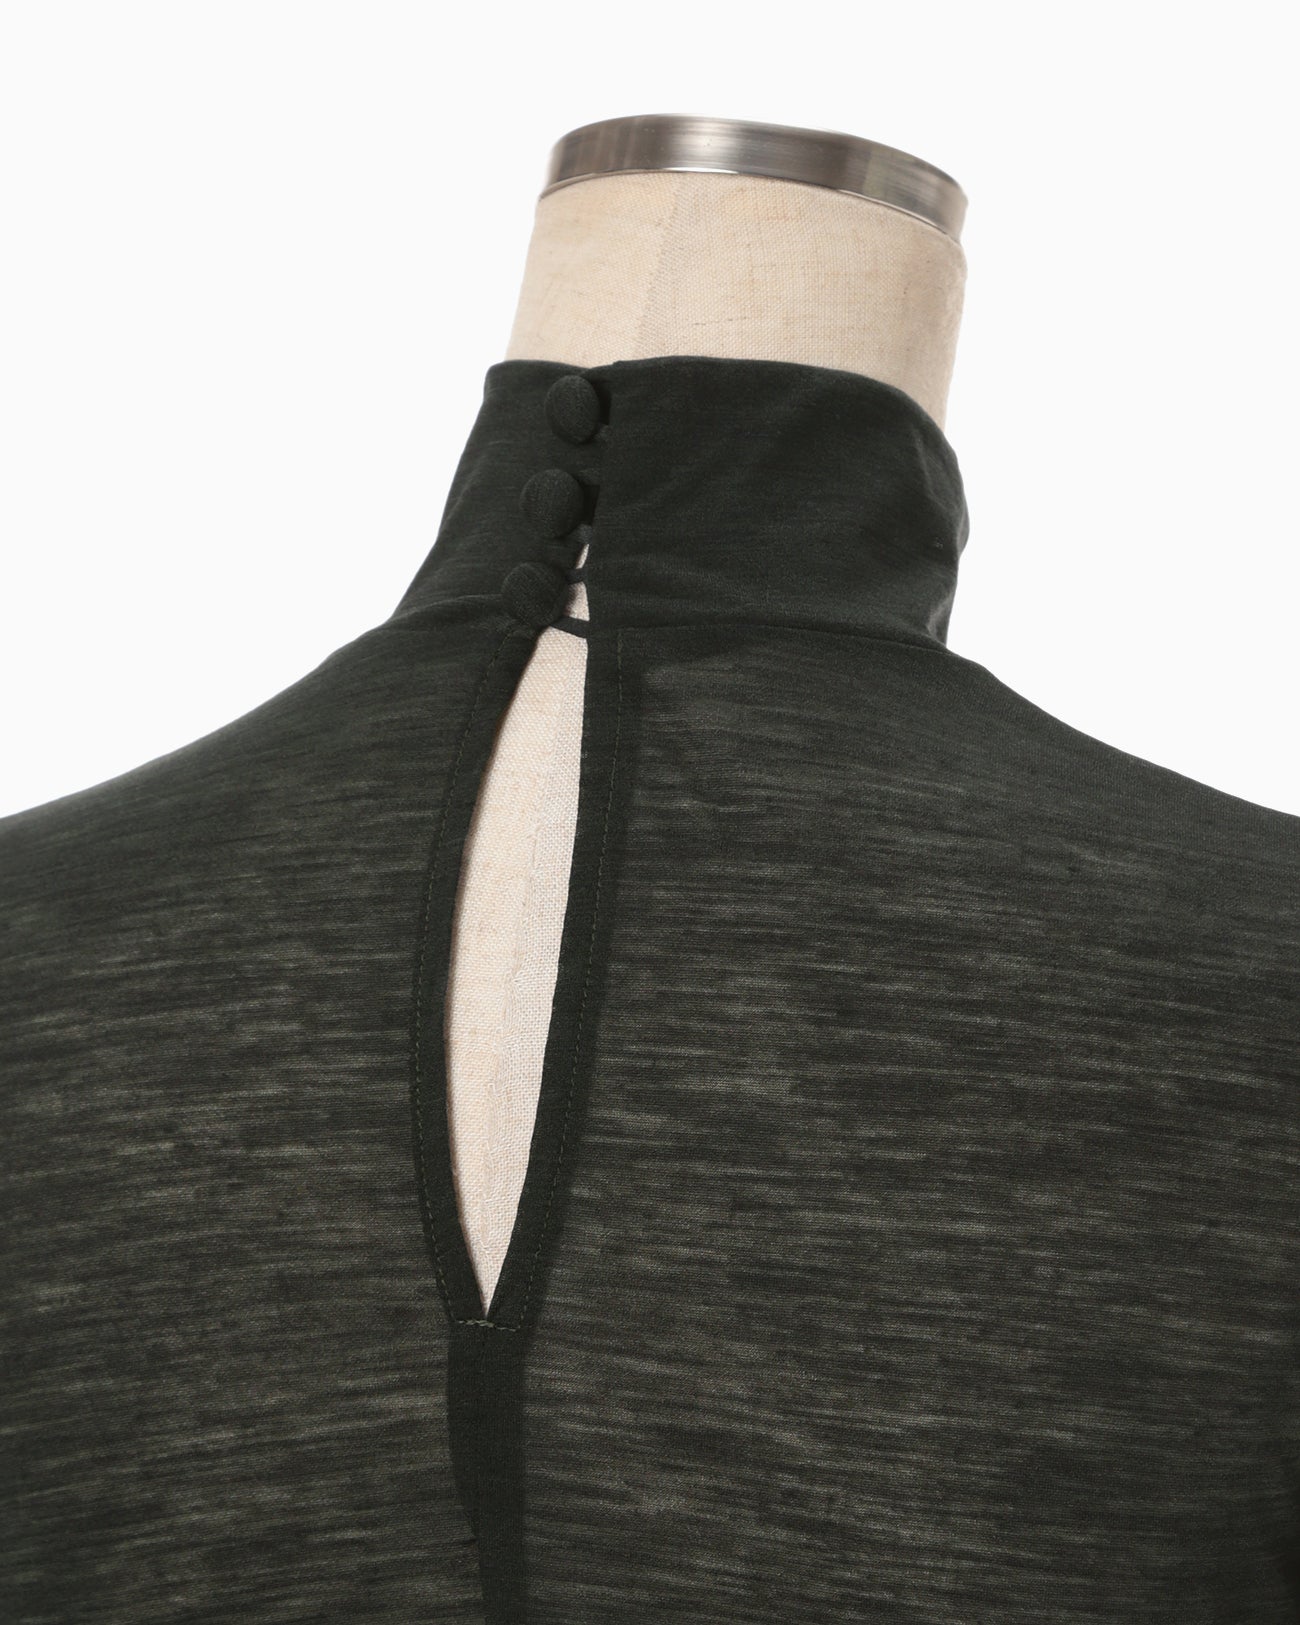 Hybrid Yarn Wool Jersey High Neck Top - khaki